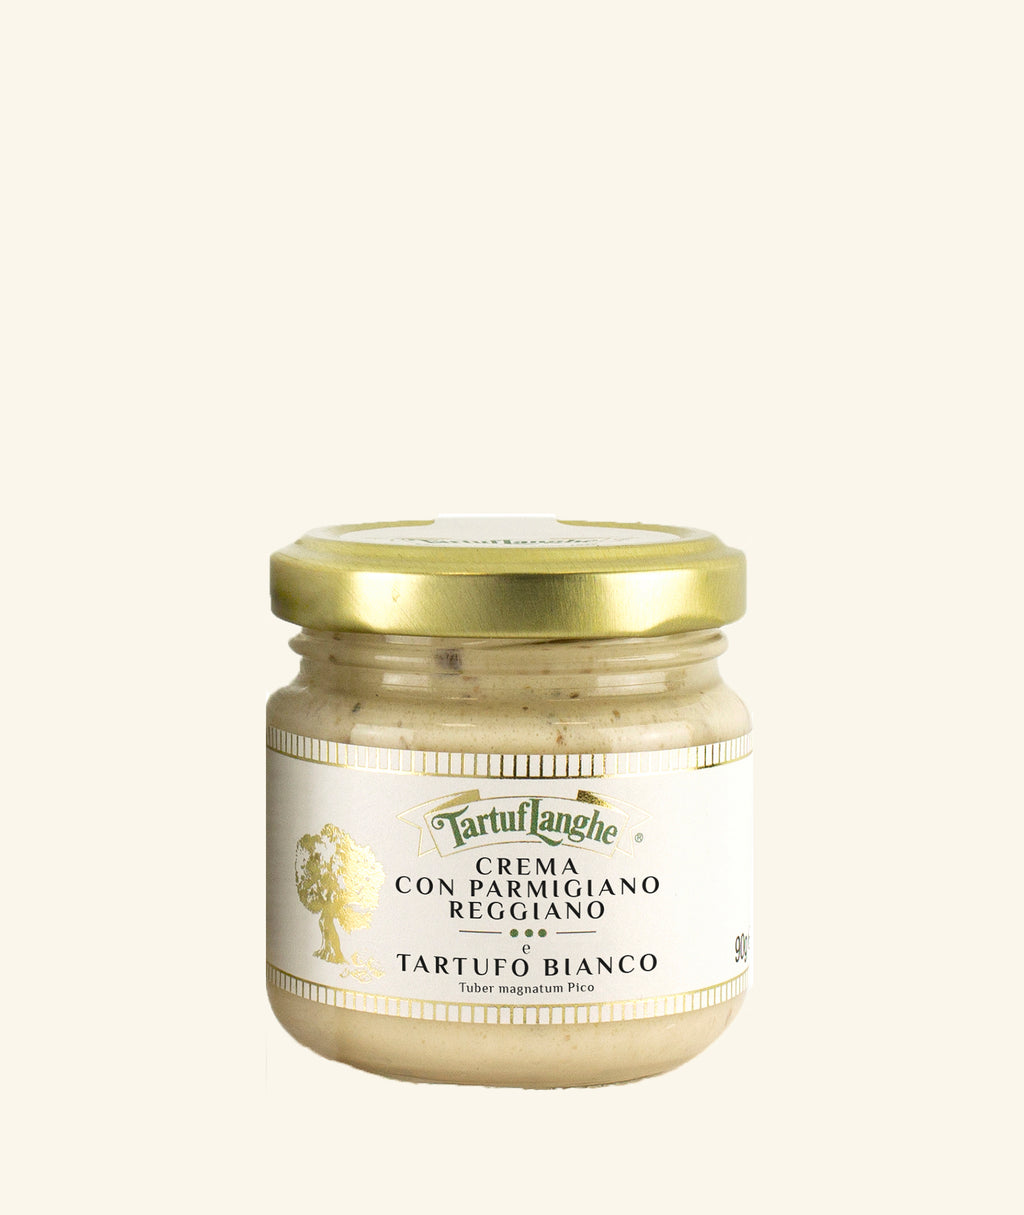 DOP Parmigiano Reggiano Cream with Truffle